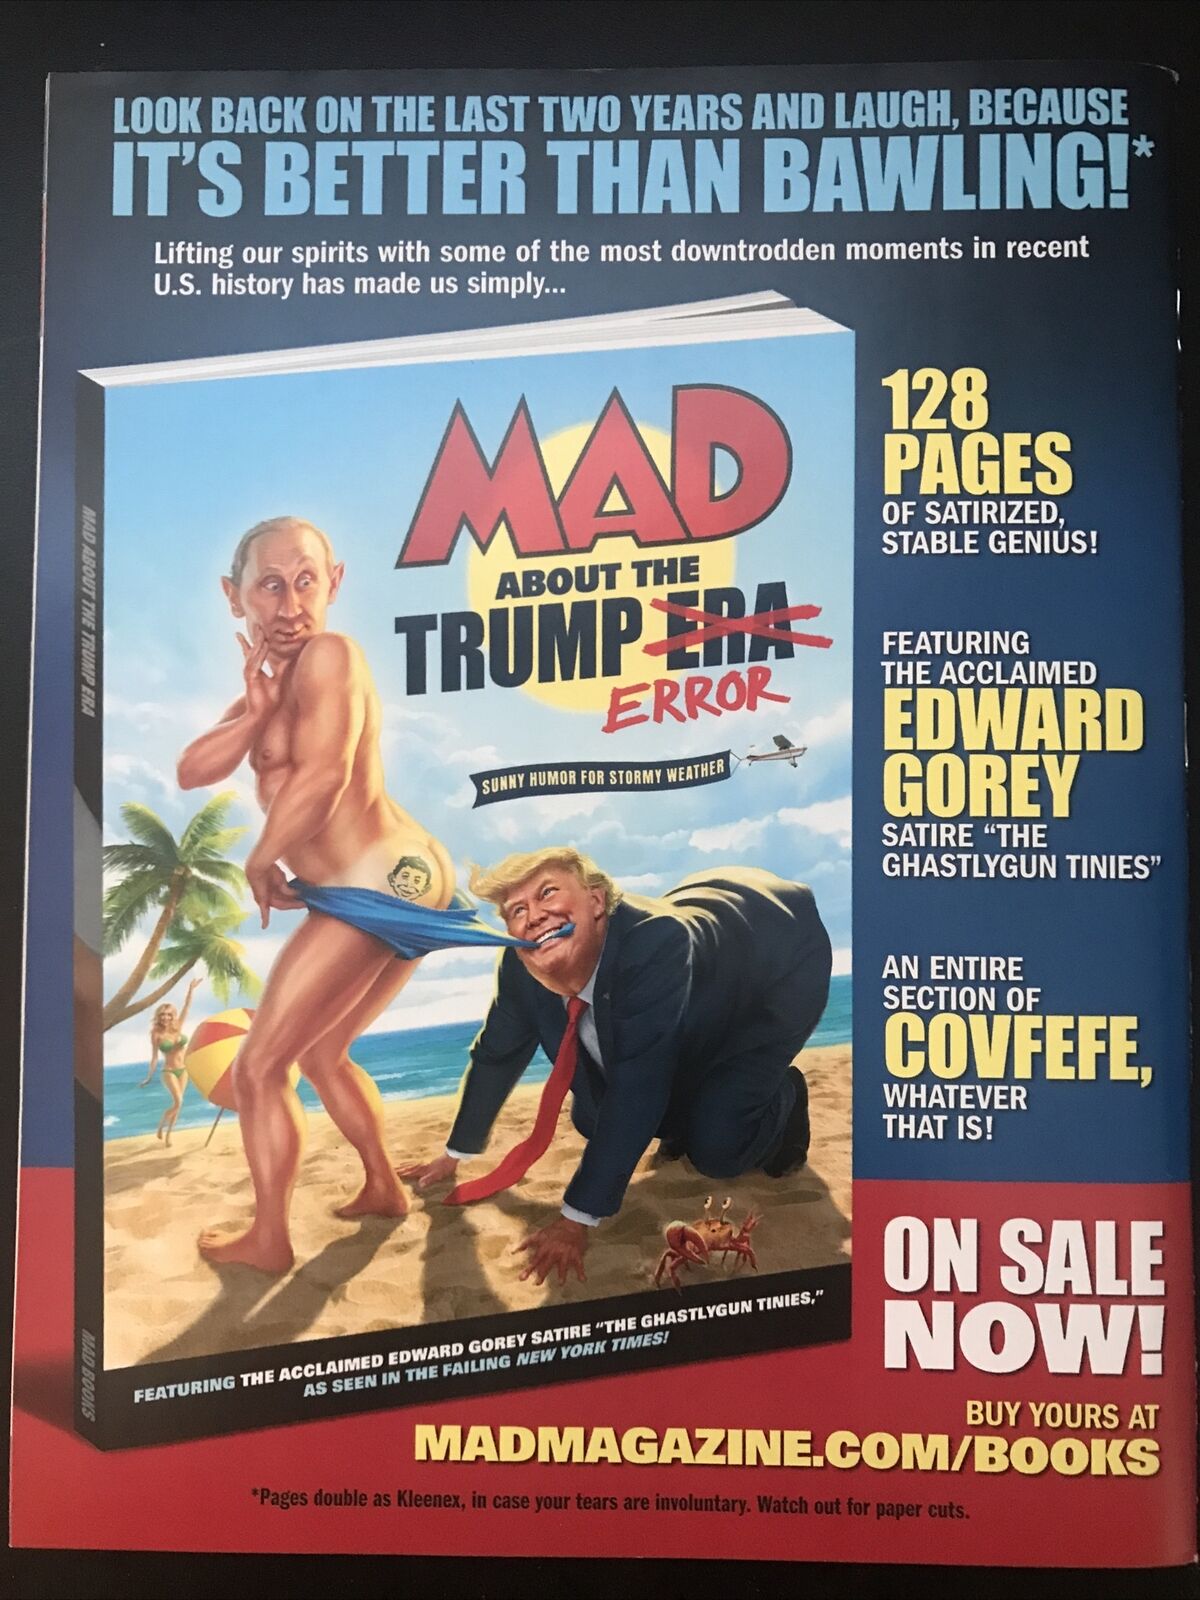 MAD Magazine No.8 Aug 2019: The Uvula Gang of Idiots LAST ISSUE Rare HIGH GRADE - aliencomics.ca